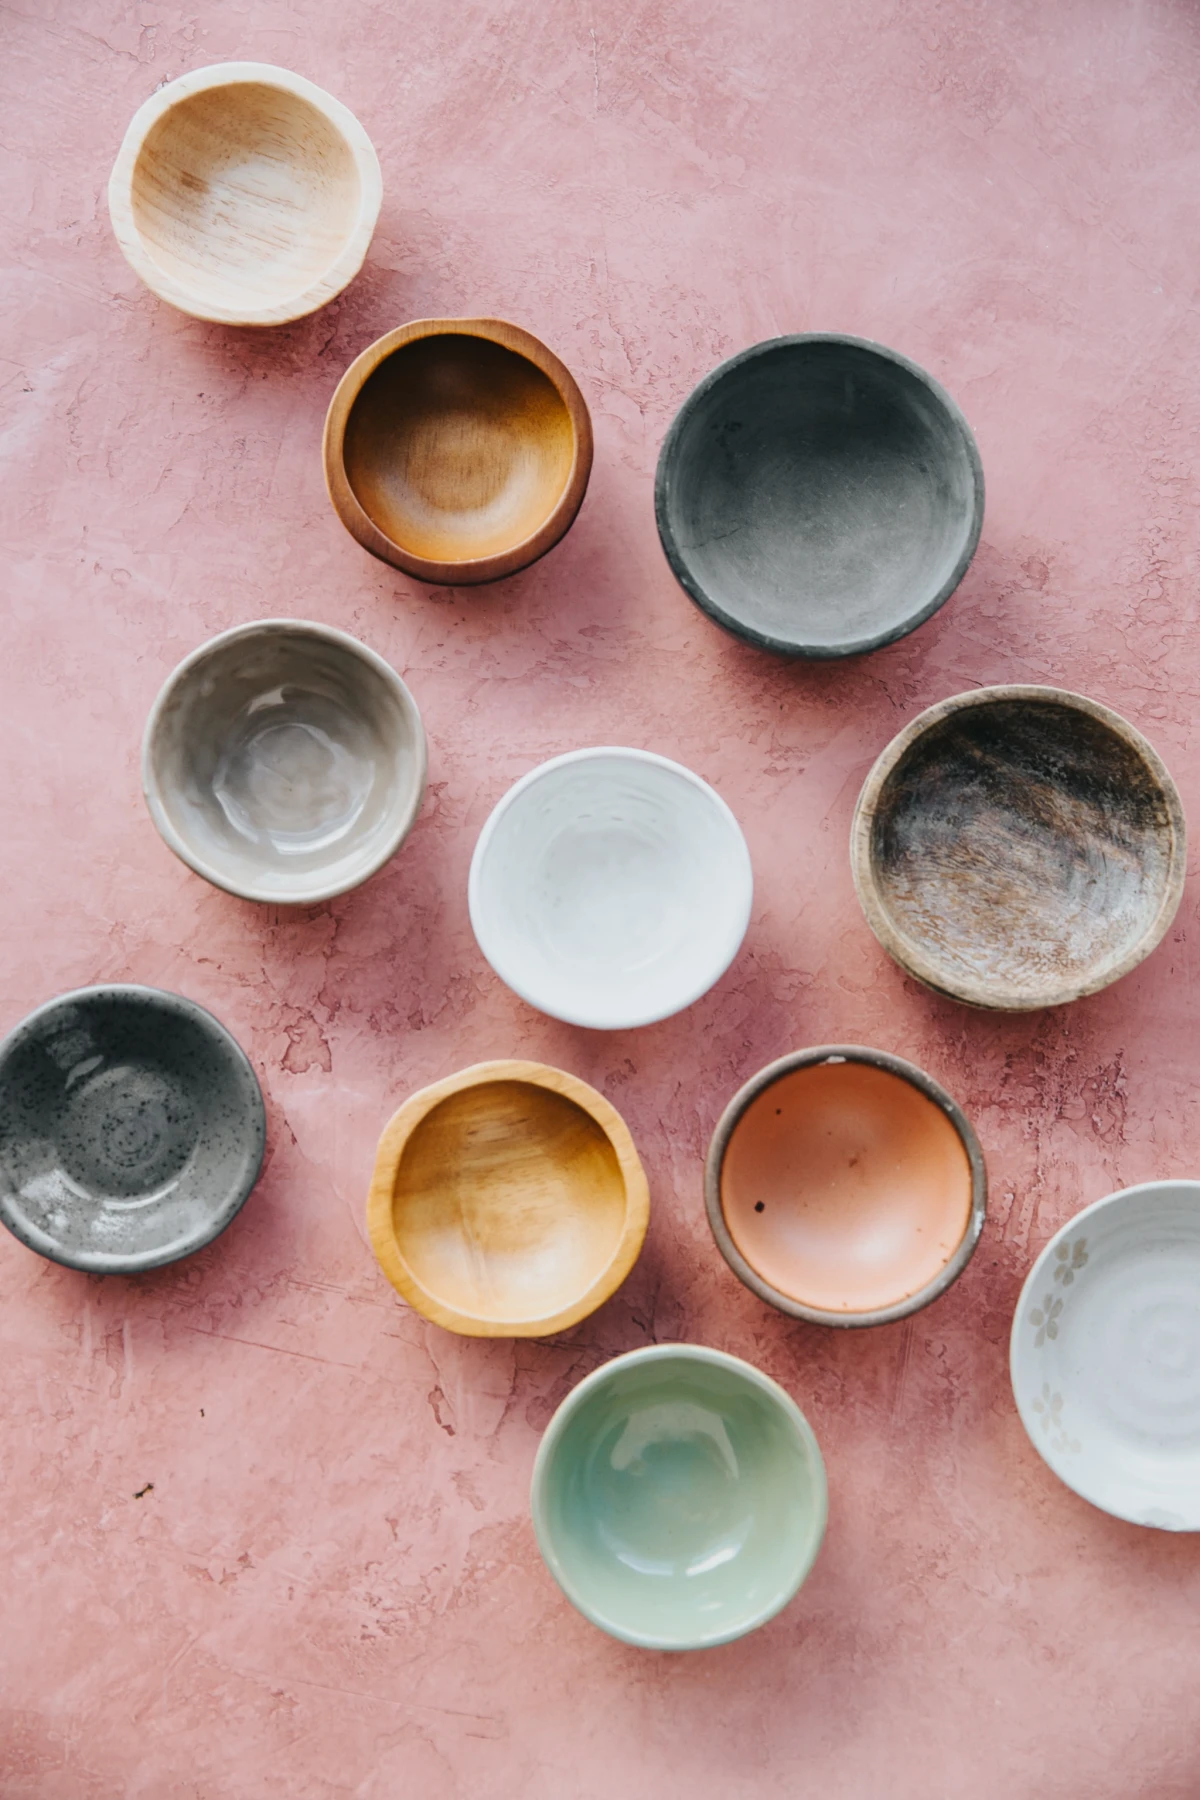 small ceramic dishes